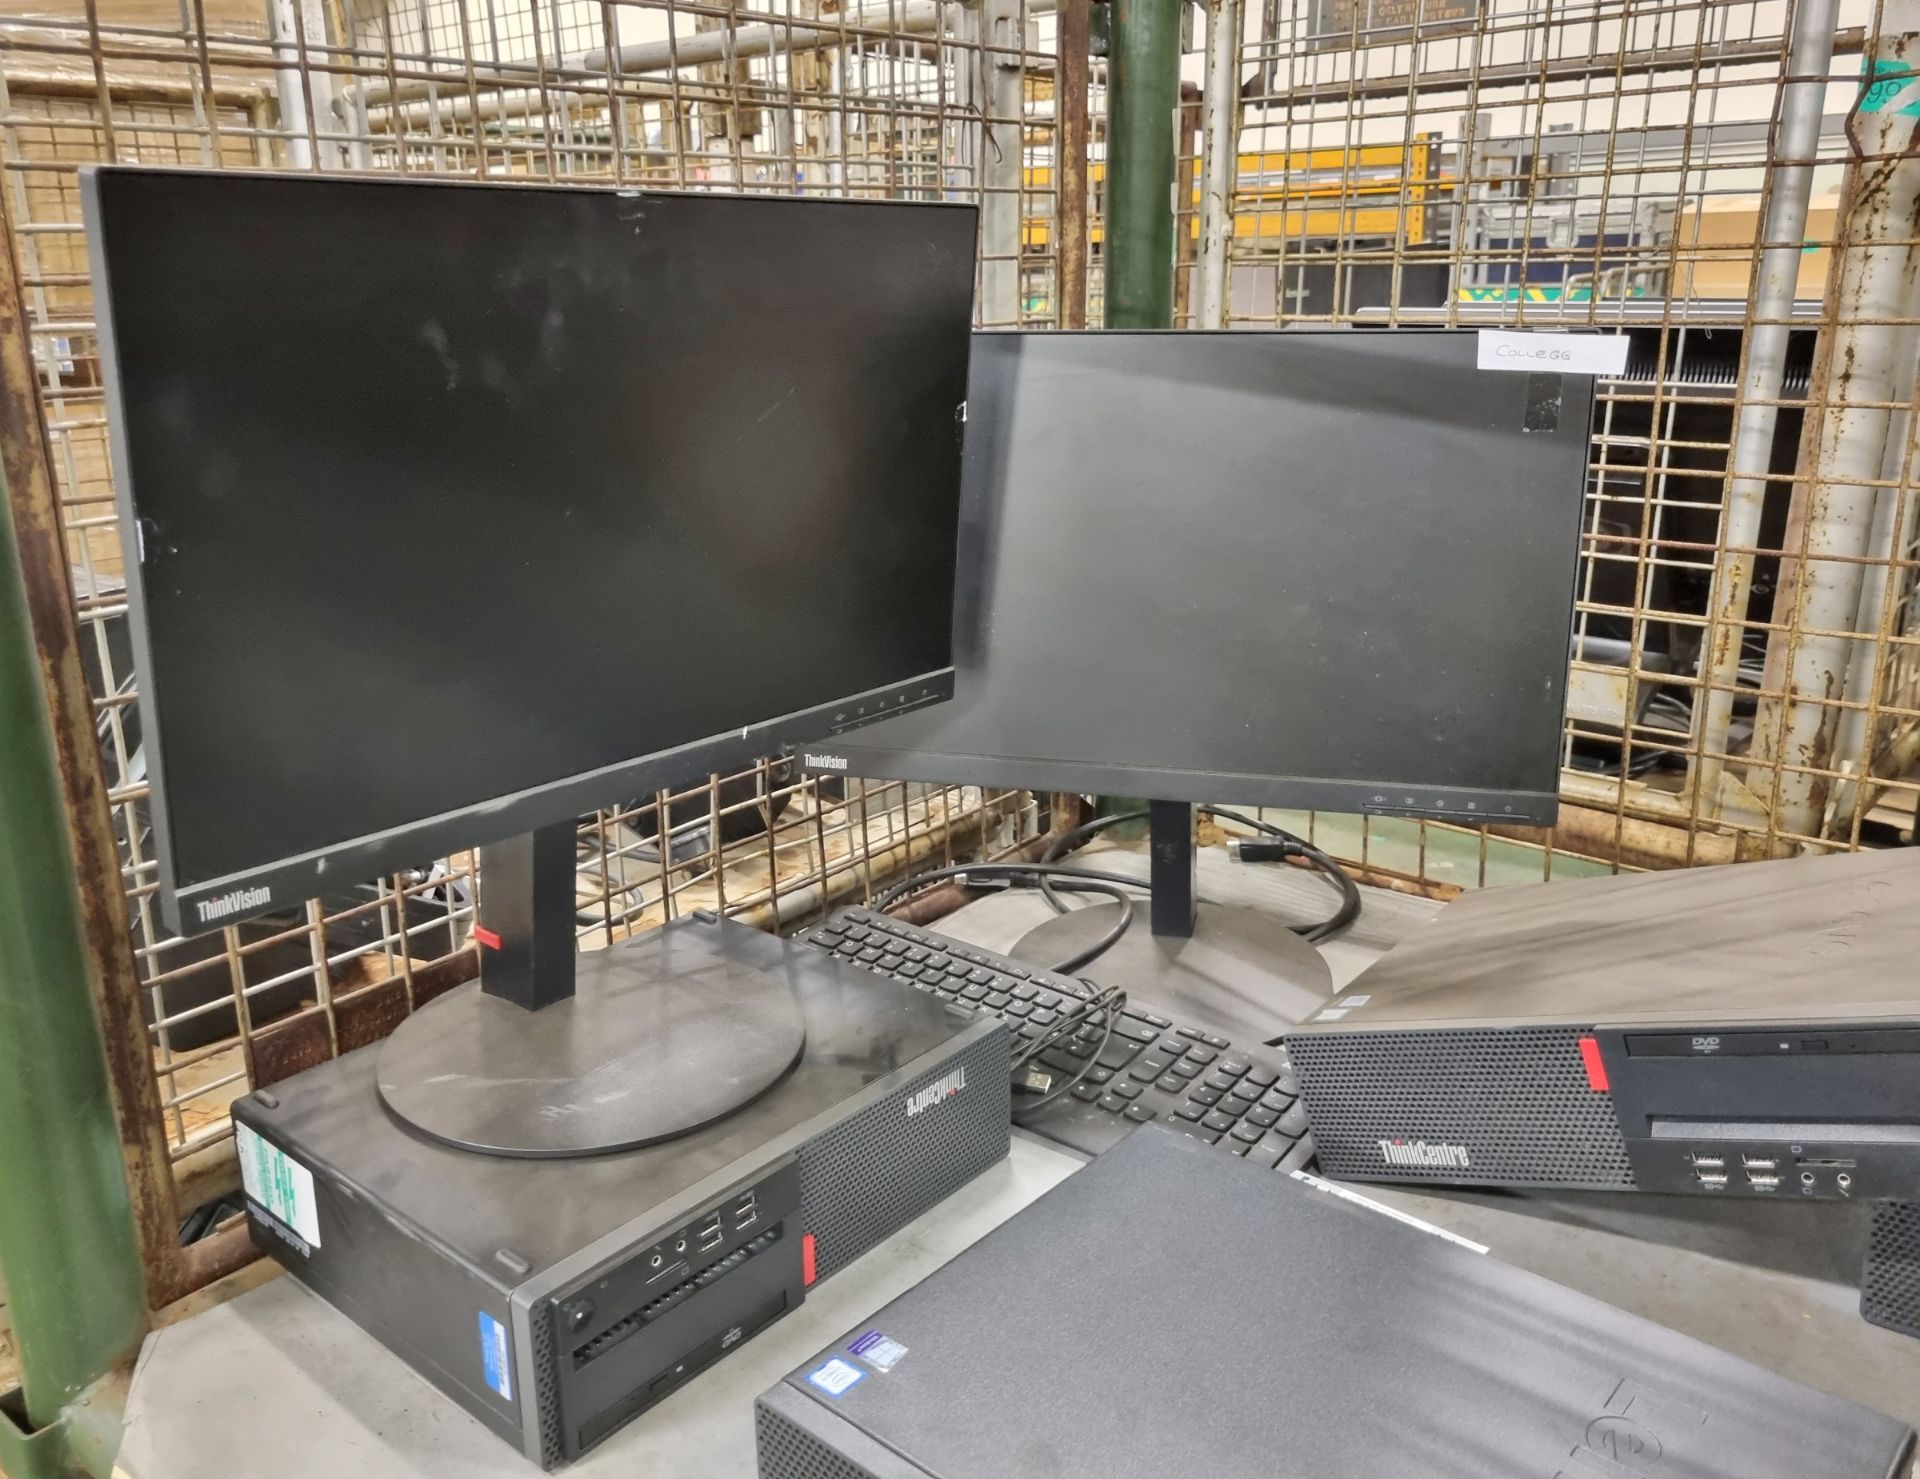 4x Lenovo Thinkcentre Computer base stations & Monitors - Image 2 of 5